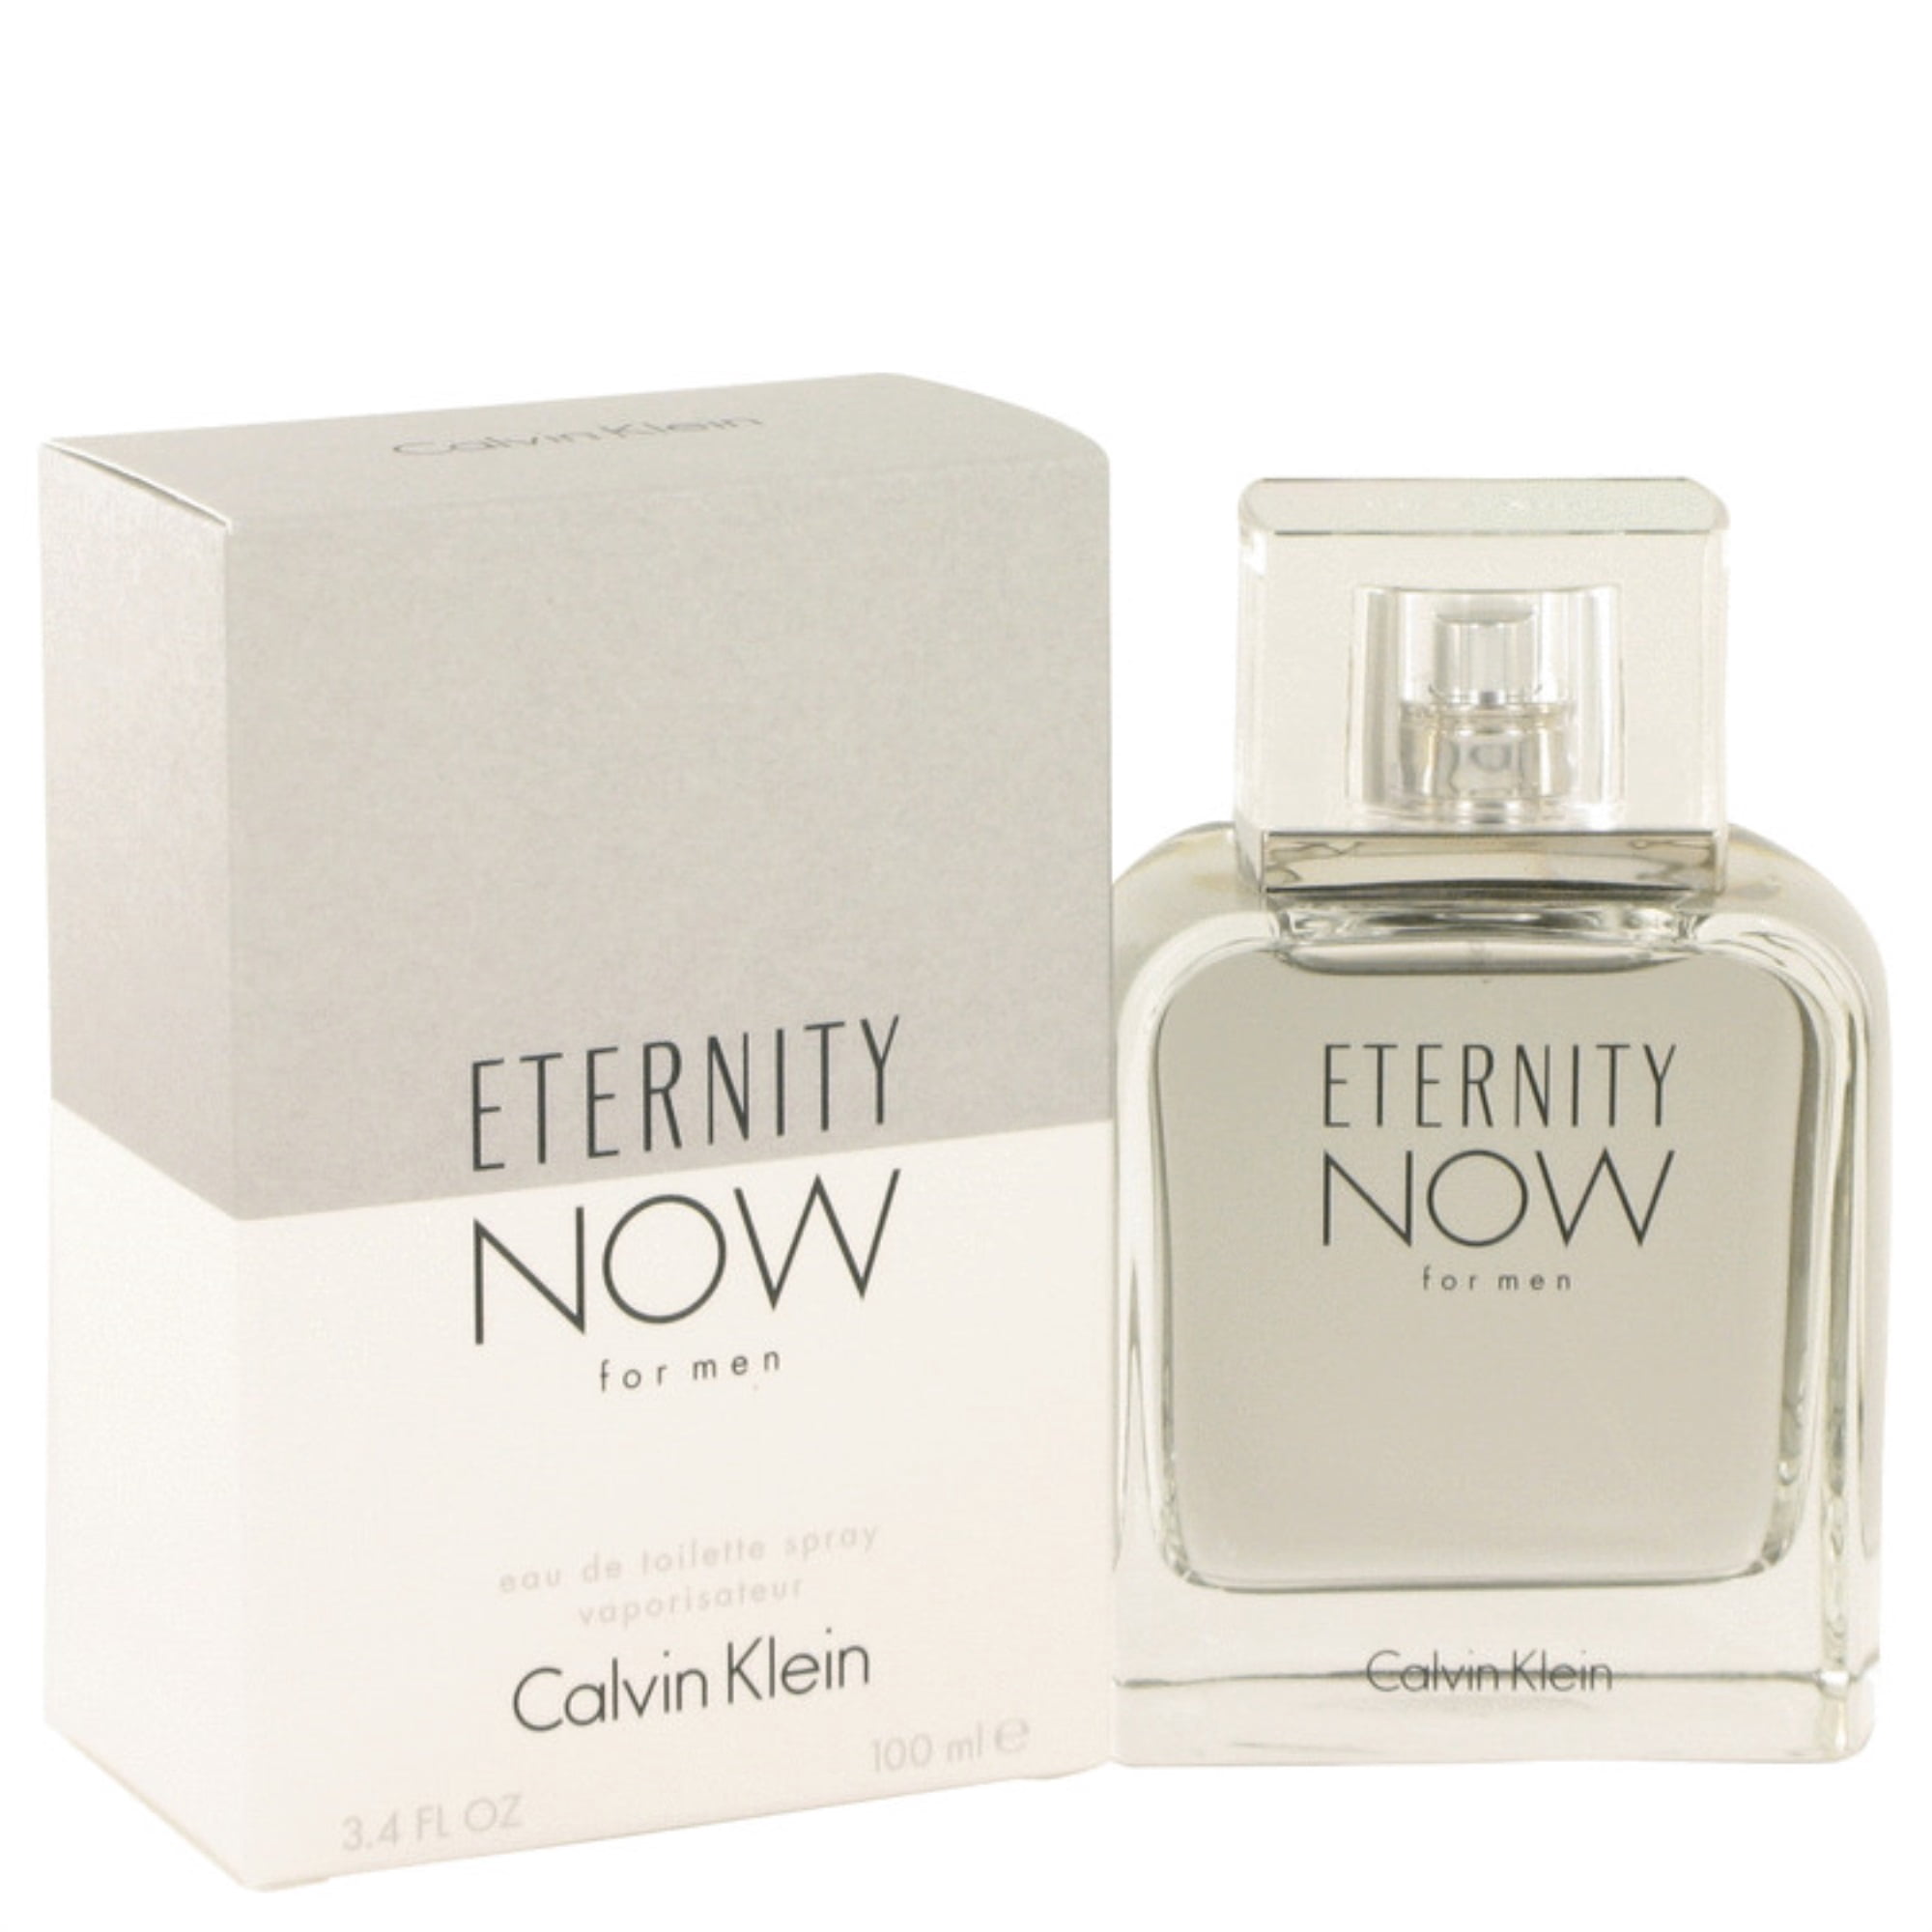 Eternity Now By Calvin Klein Eau de Toilette Spray for Men  oz | Walmart  Canada